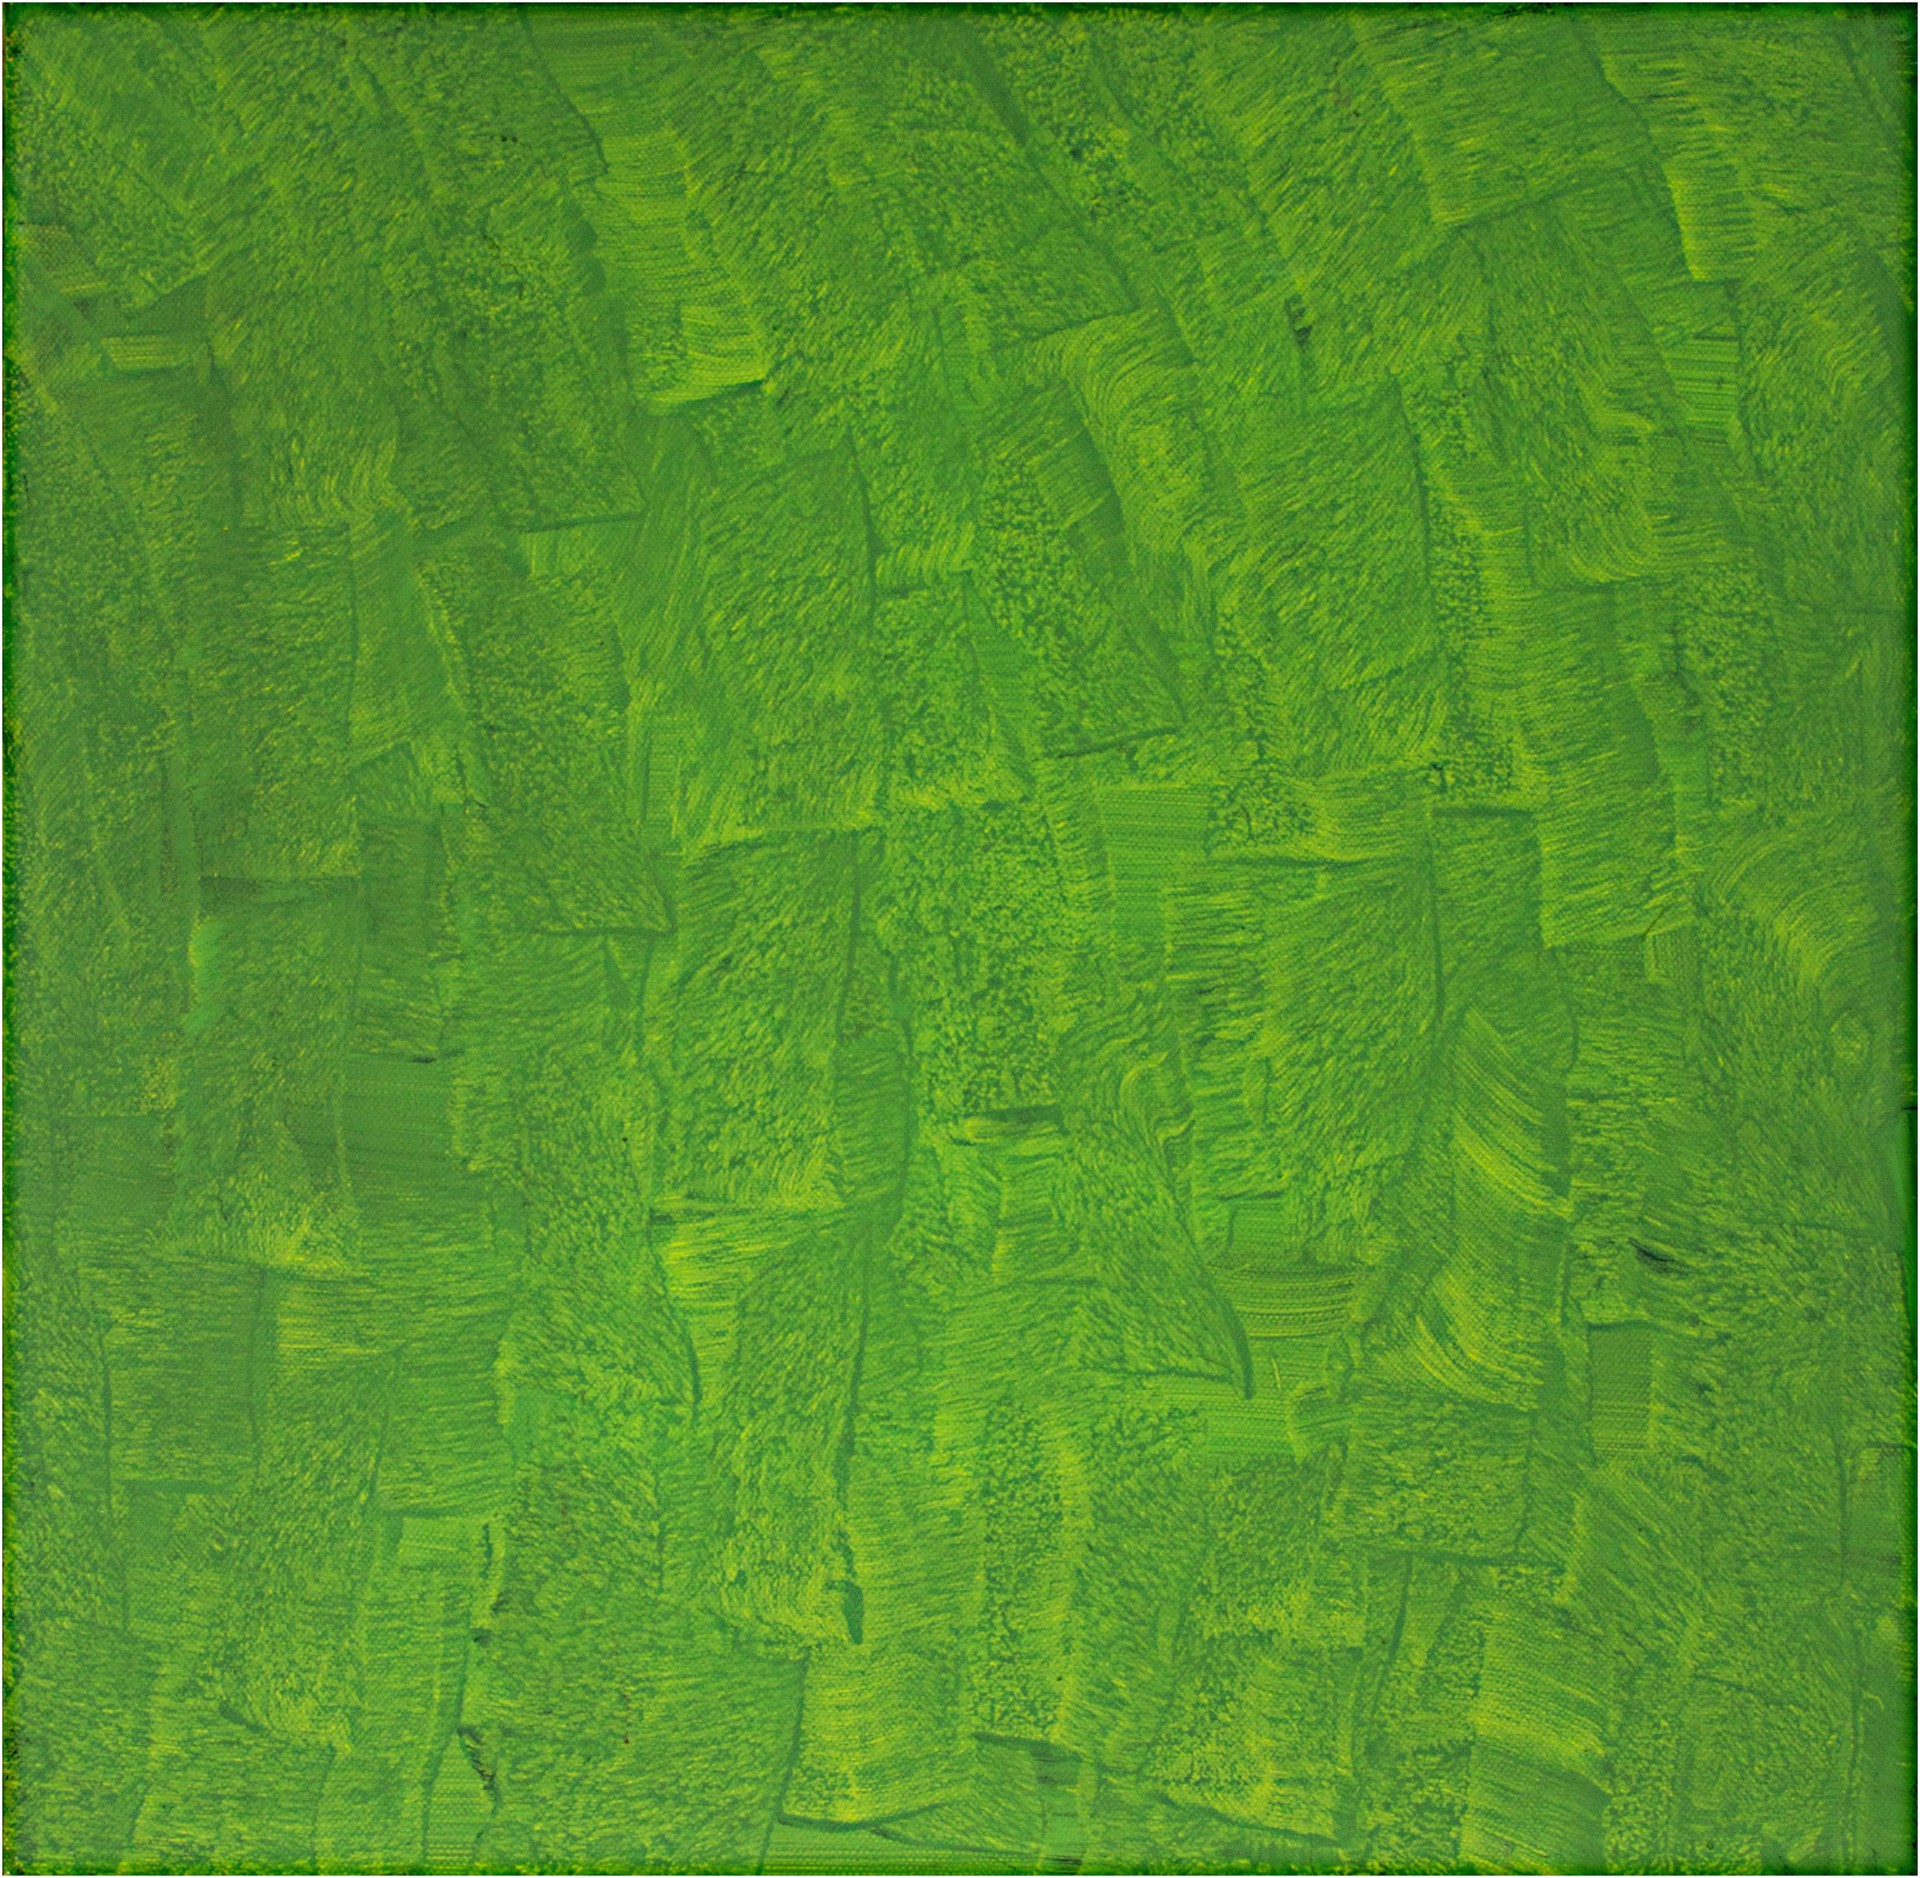 Greenish Infinity by Reginald K. Gee